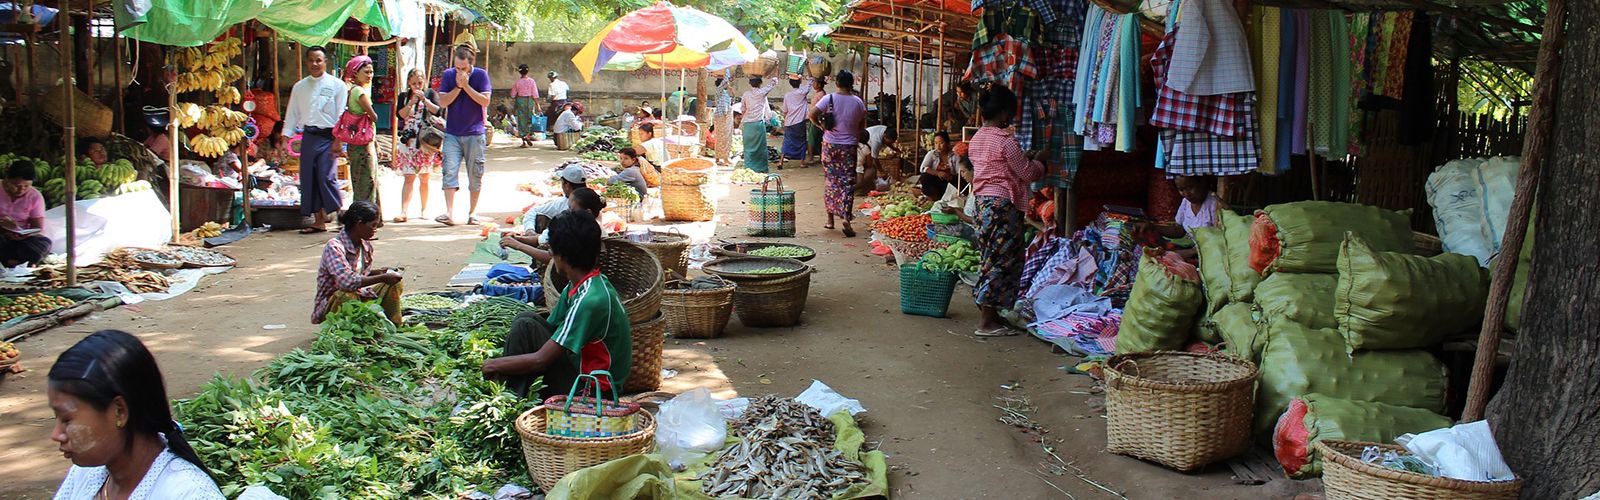 Myanmar Culture And Cuisine